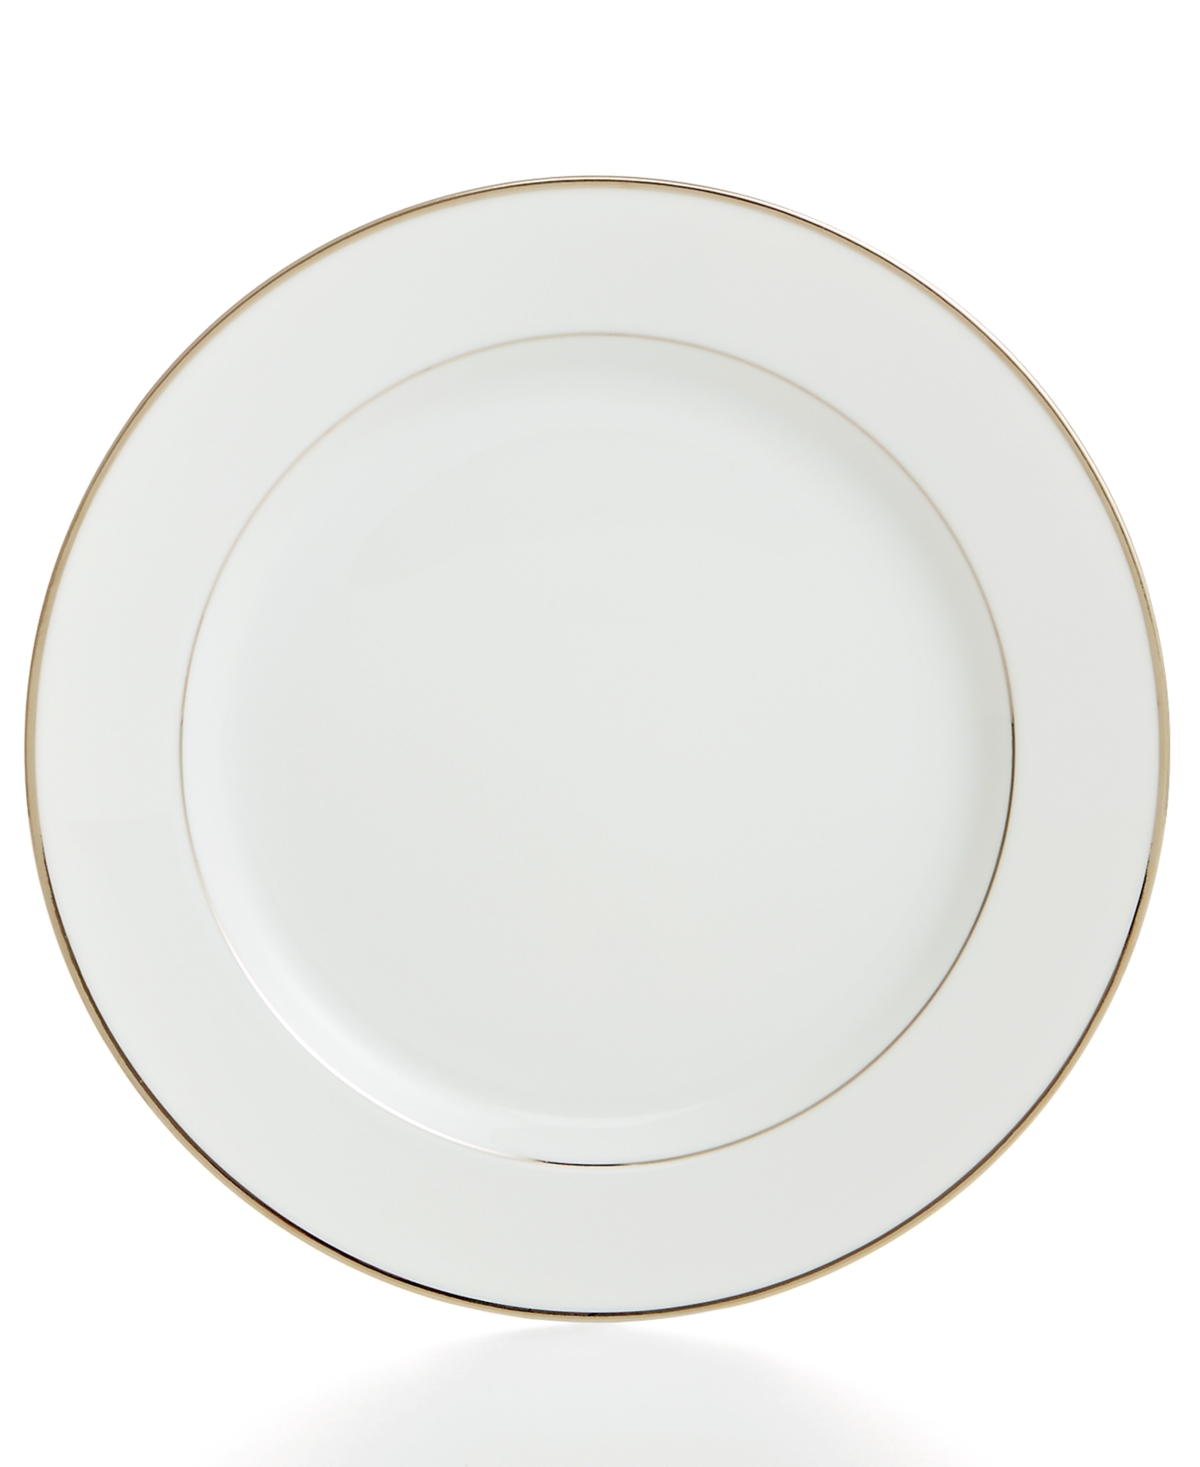 204282 Bernardaud Cristal Salad Plate sku 204282